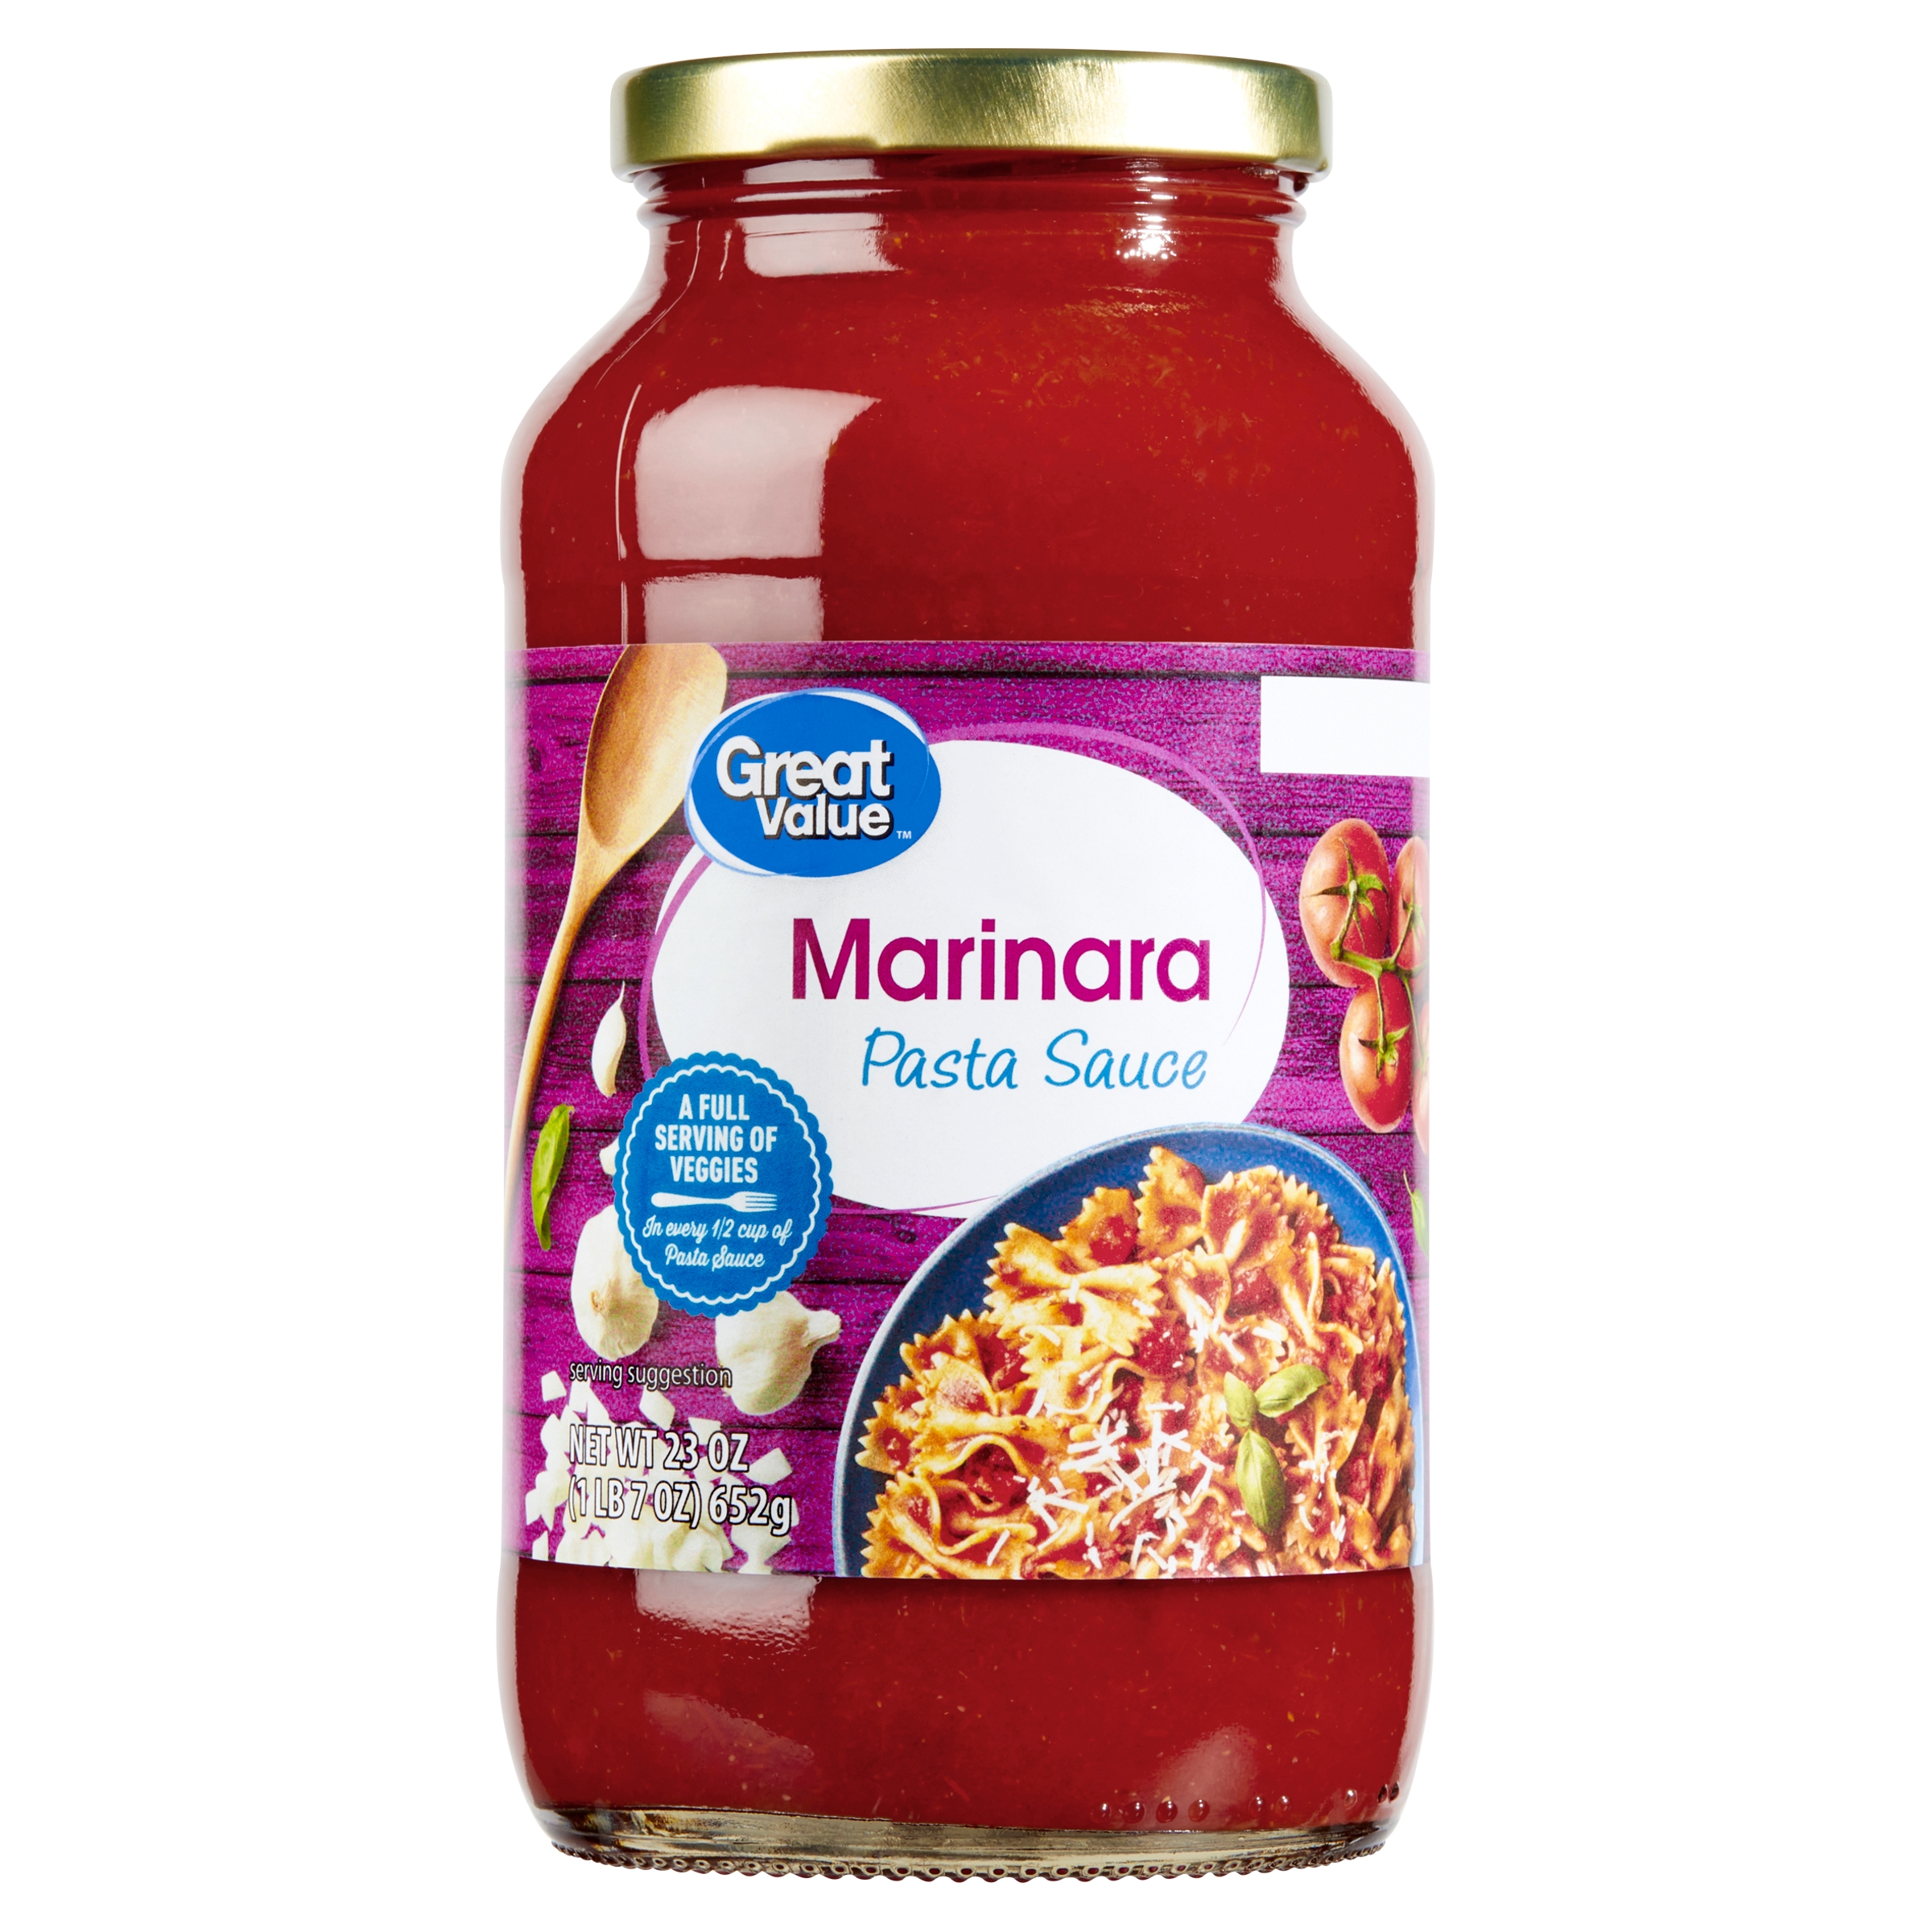 Great Value Marinara Pasta Sauce, 23 oz - image 1 of 8